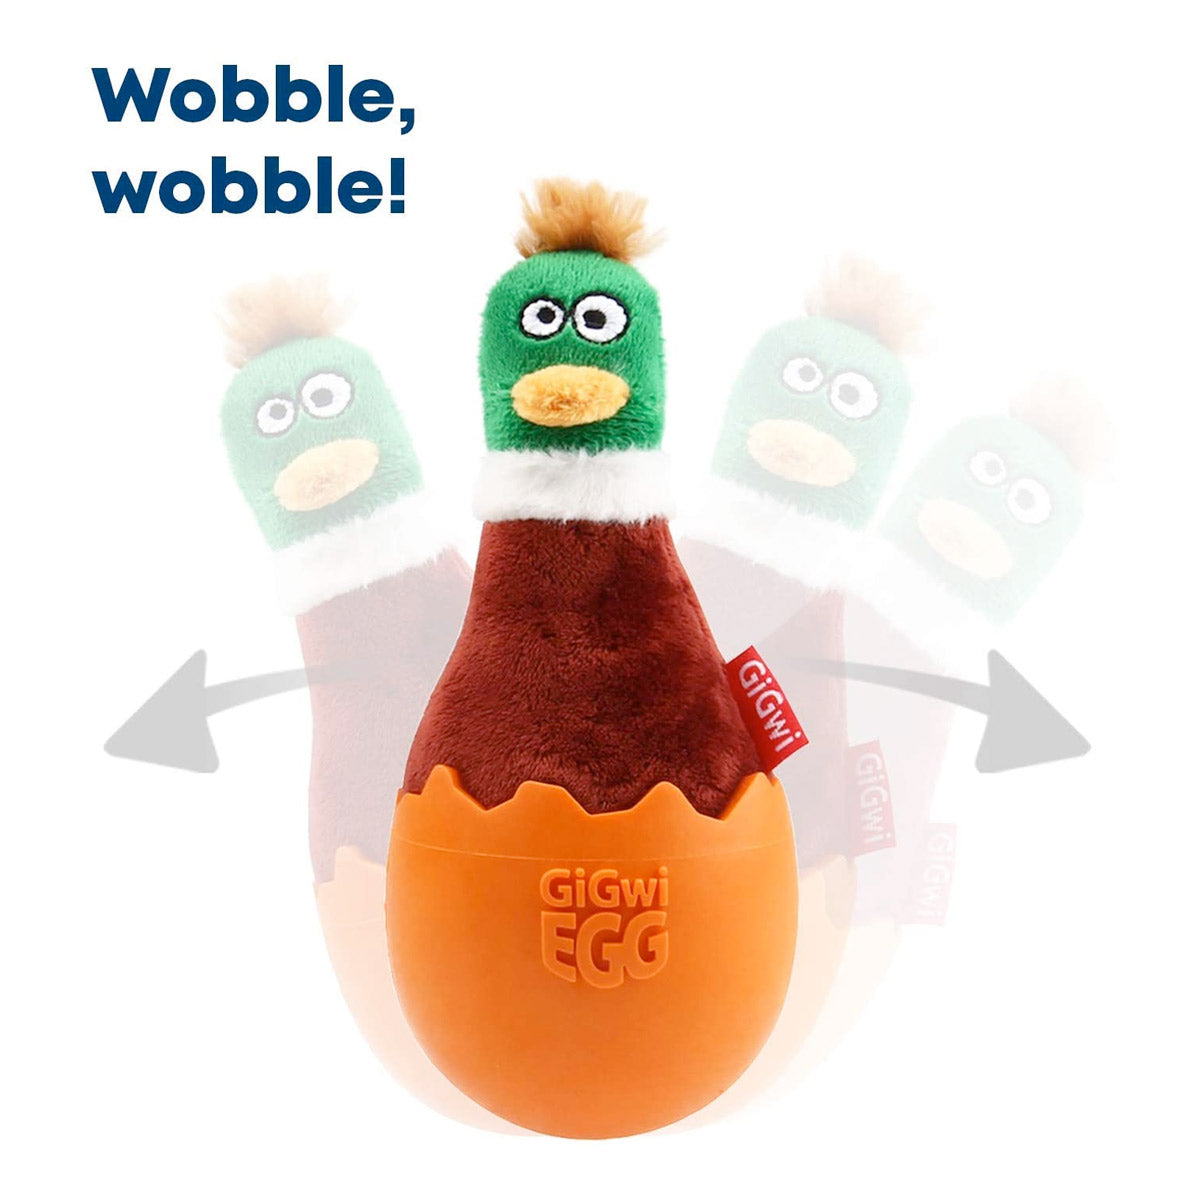 GiGwi EGG Wobble Fun Brown Duck – Medium